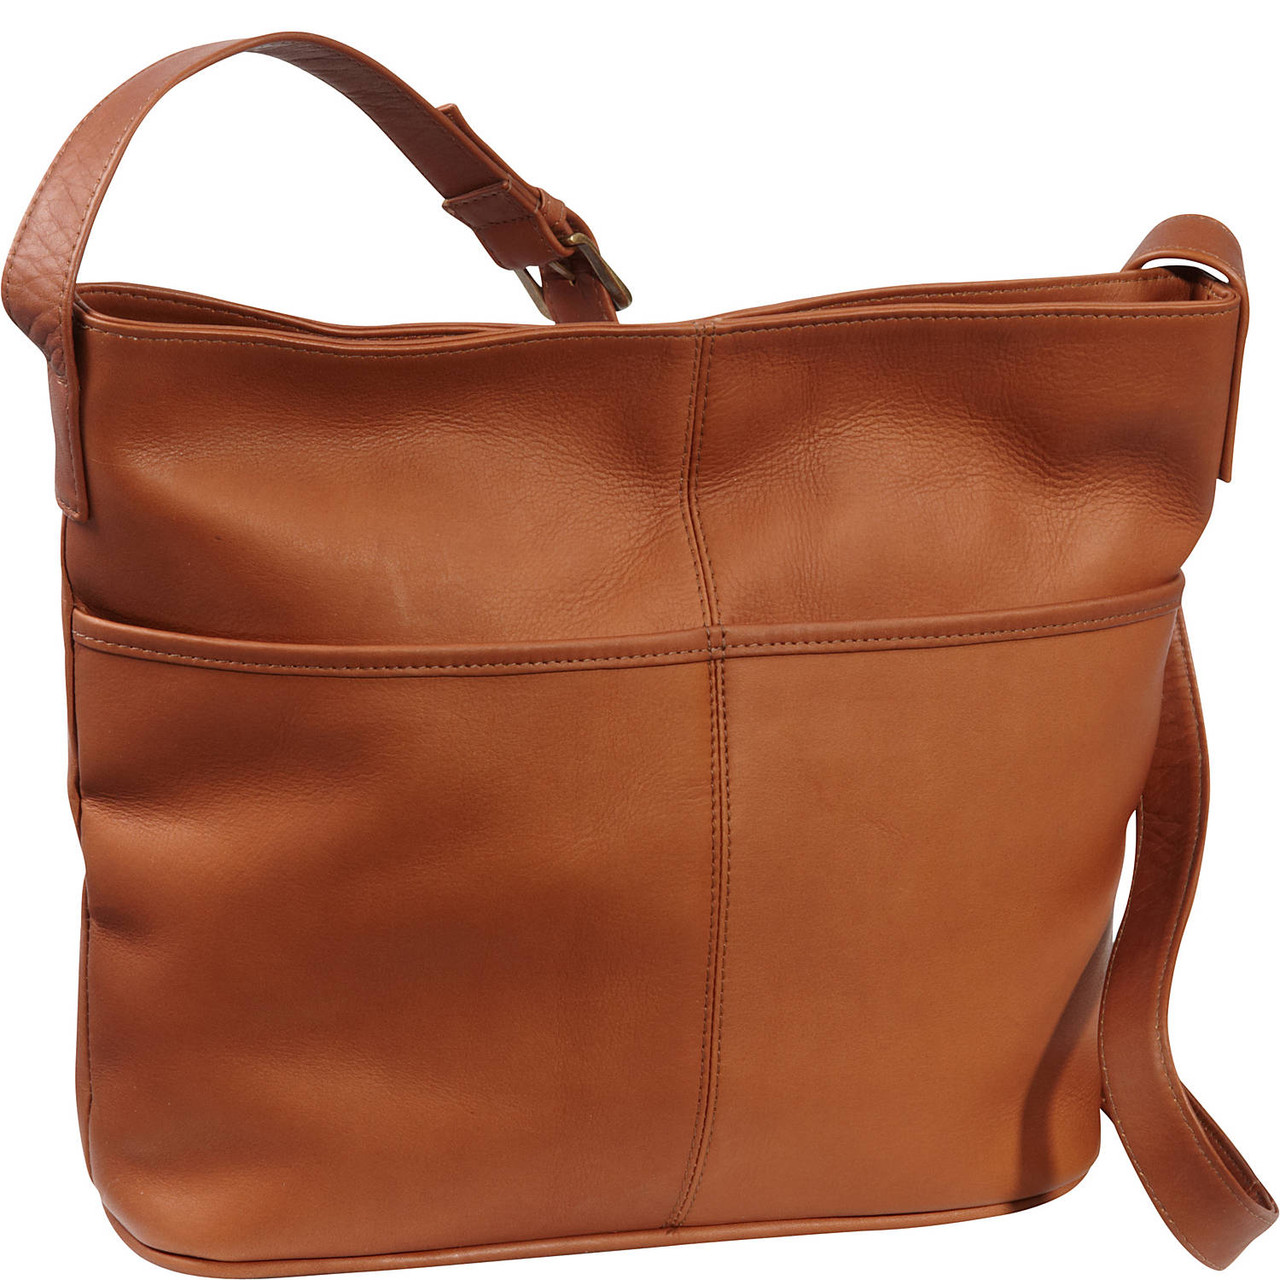 Solférino leather handbag